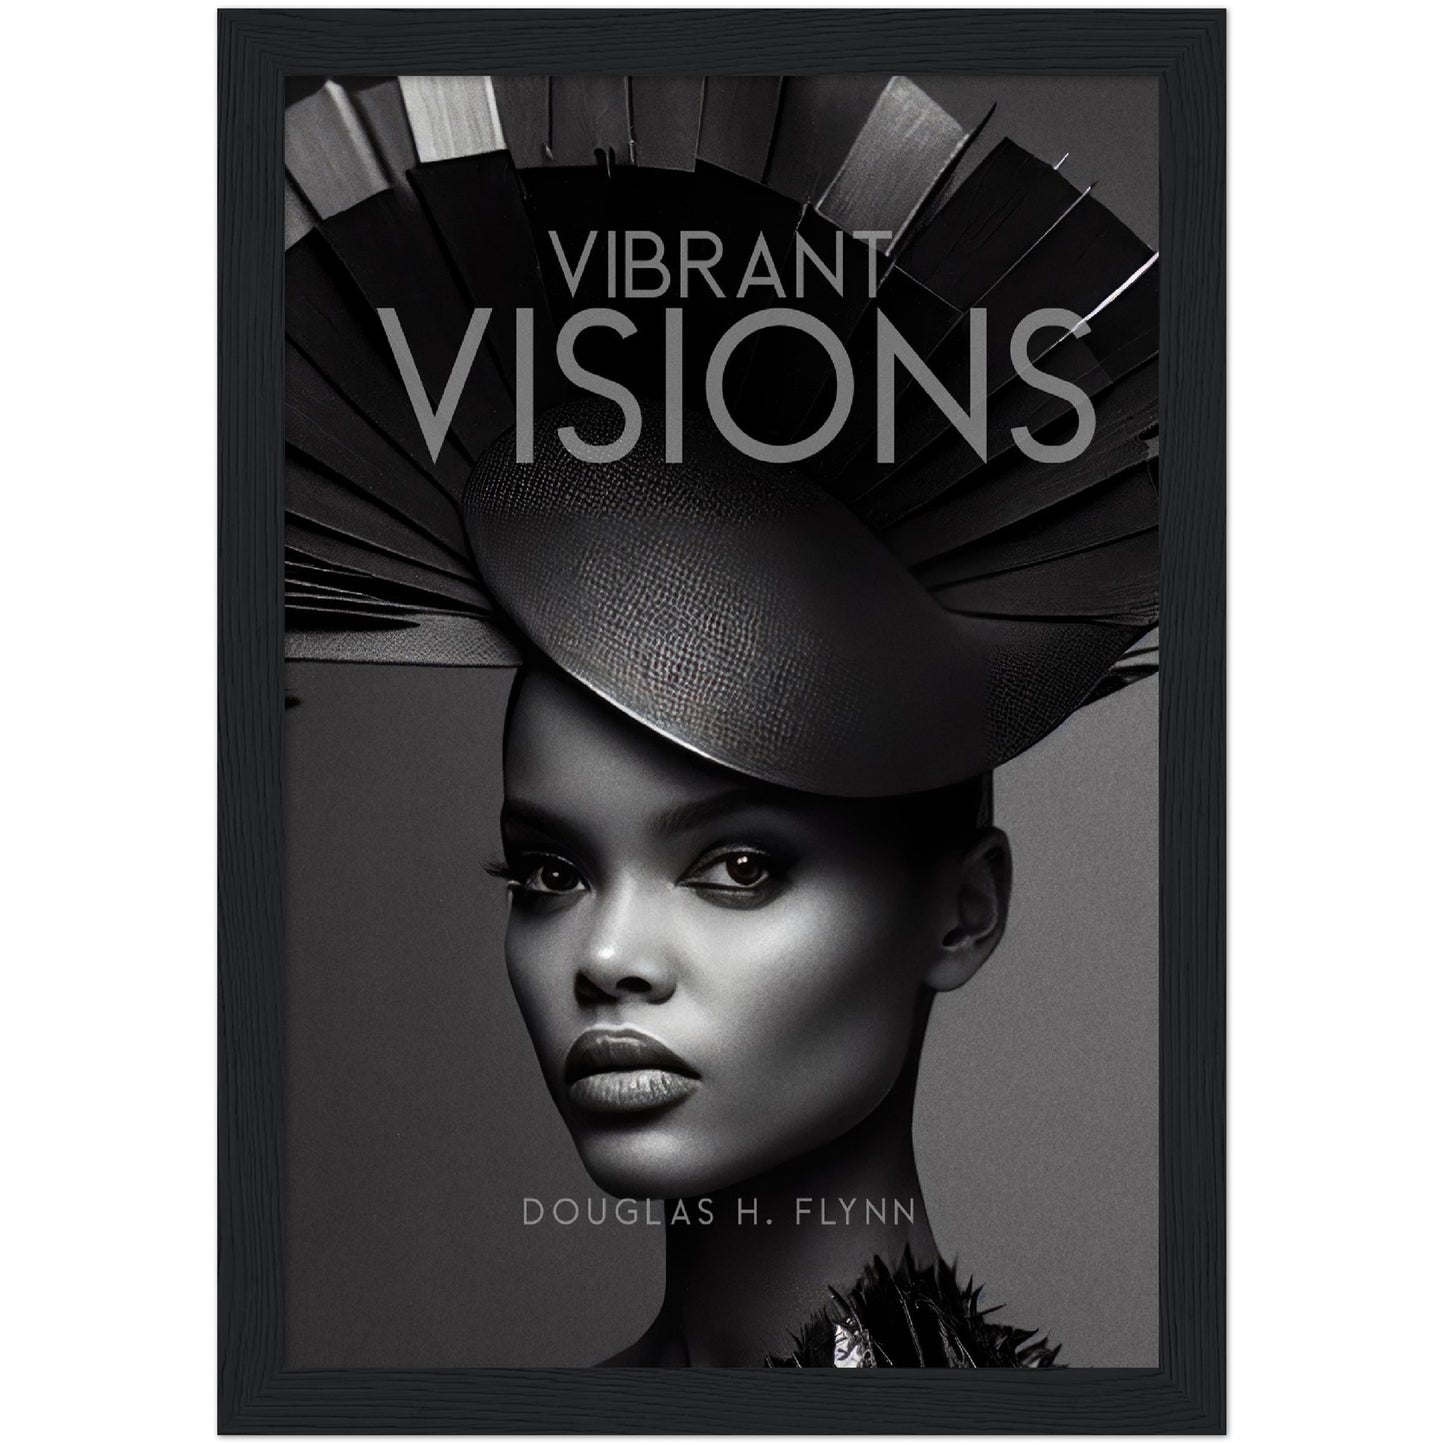 »Vibrant Visions« merch poster